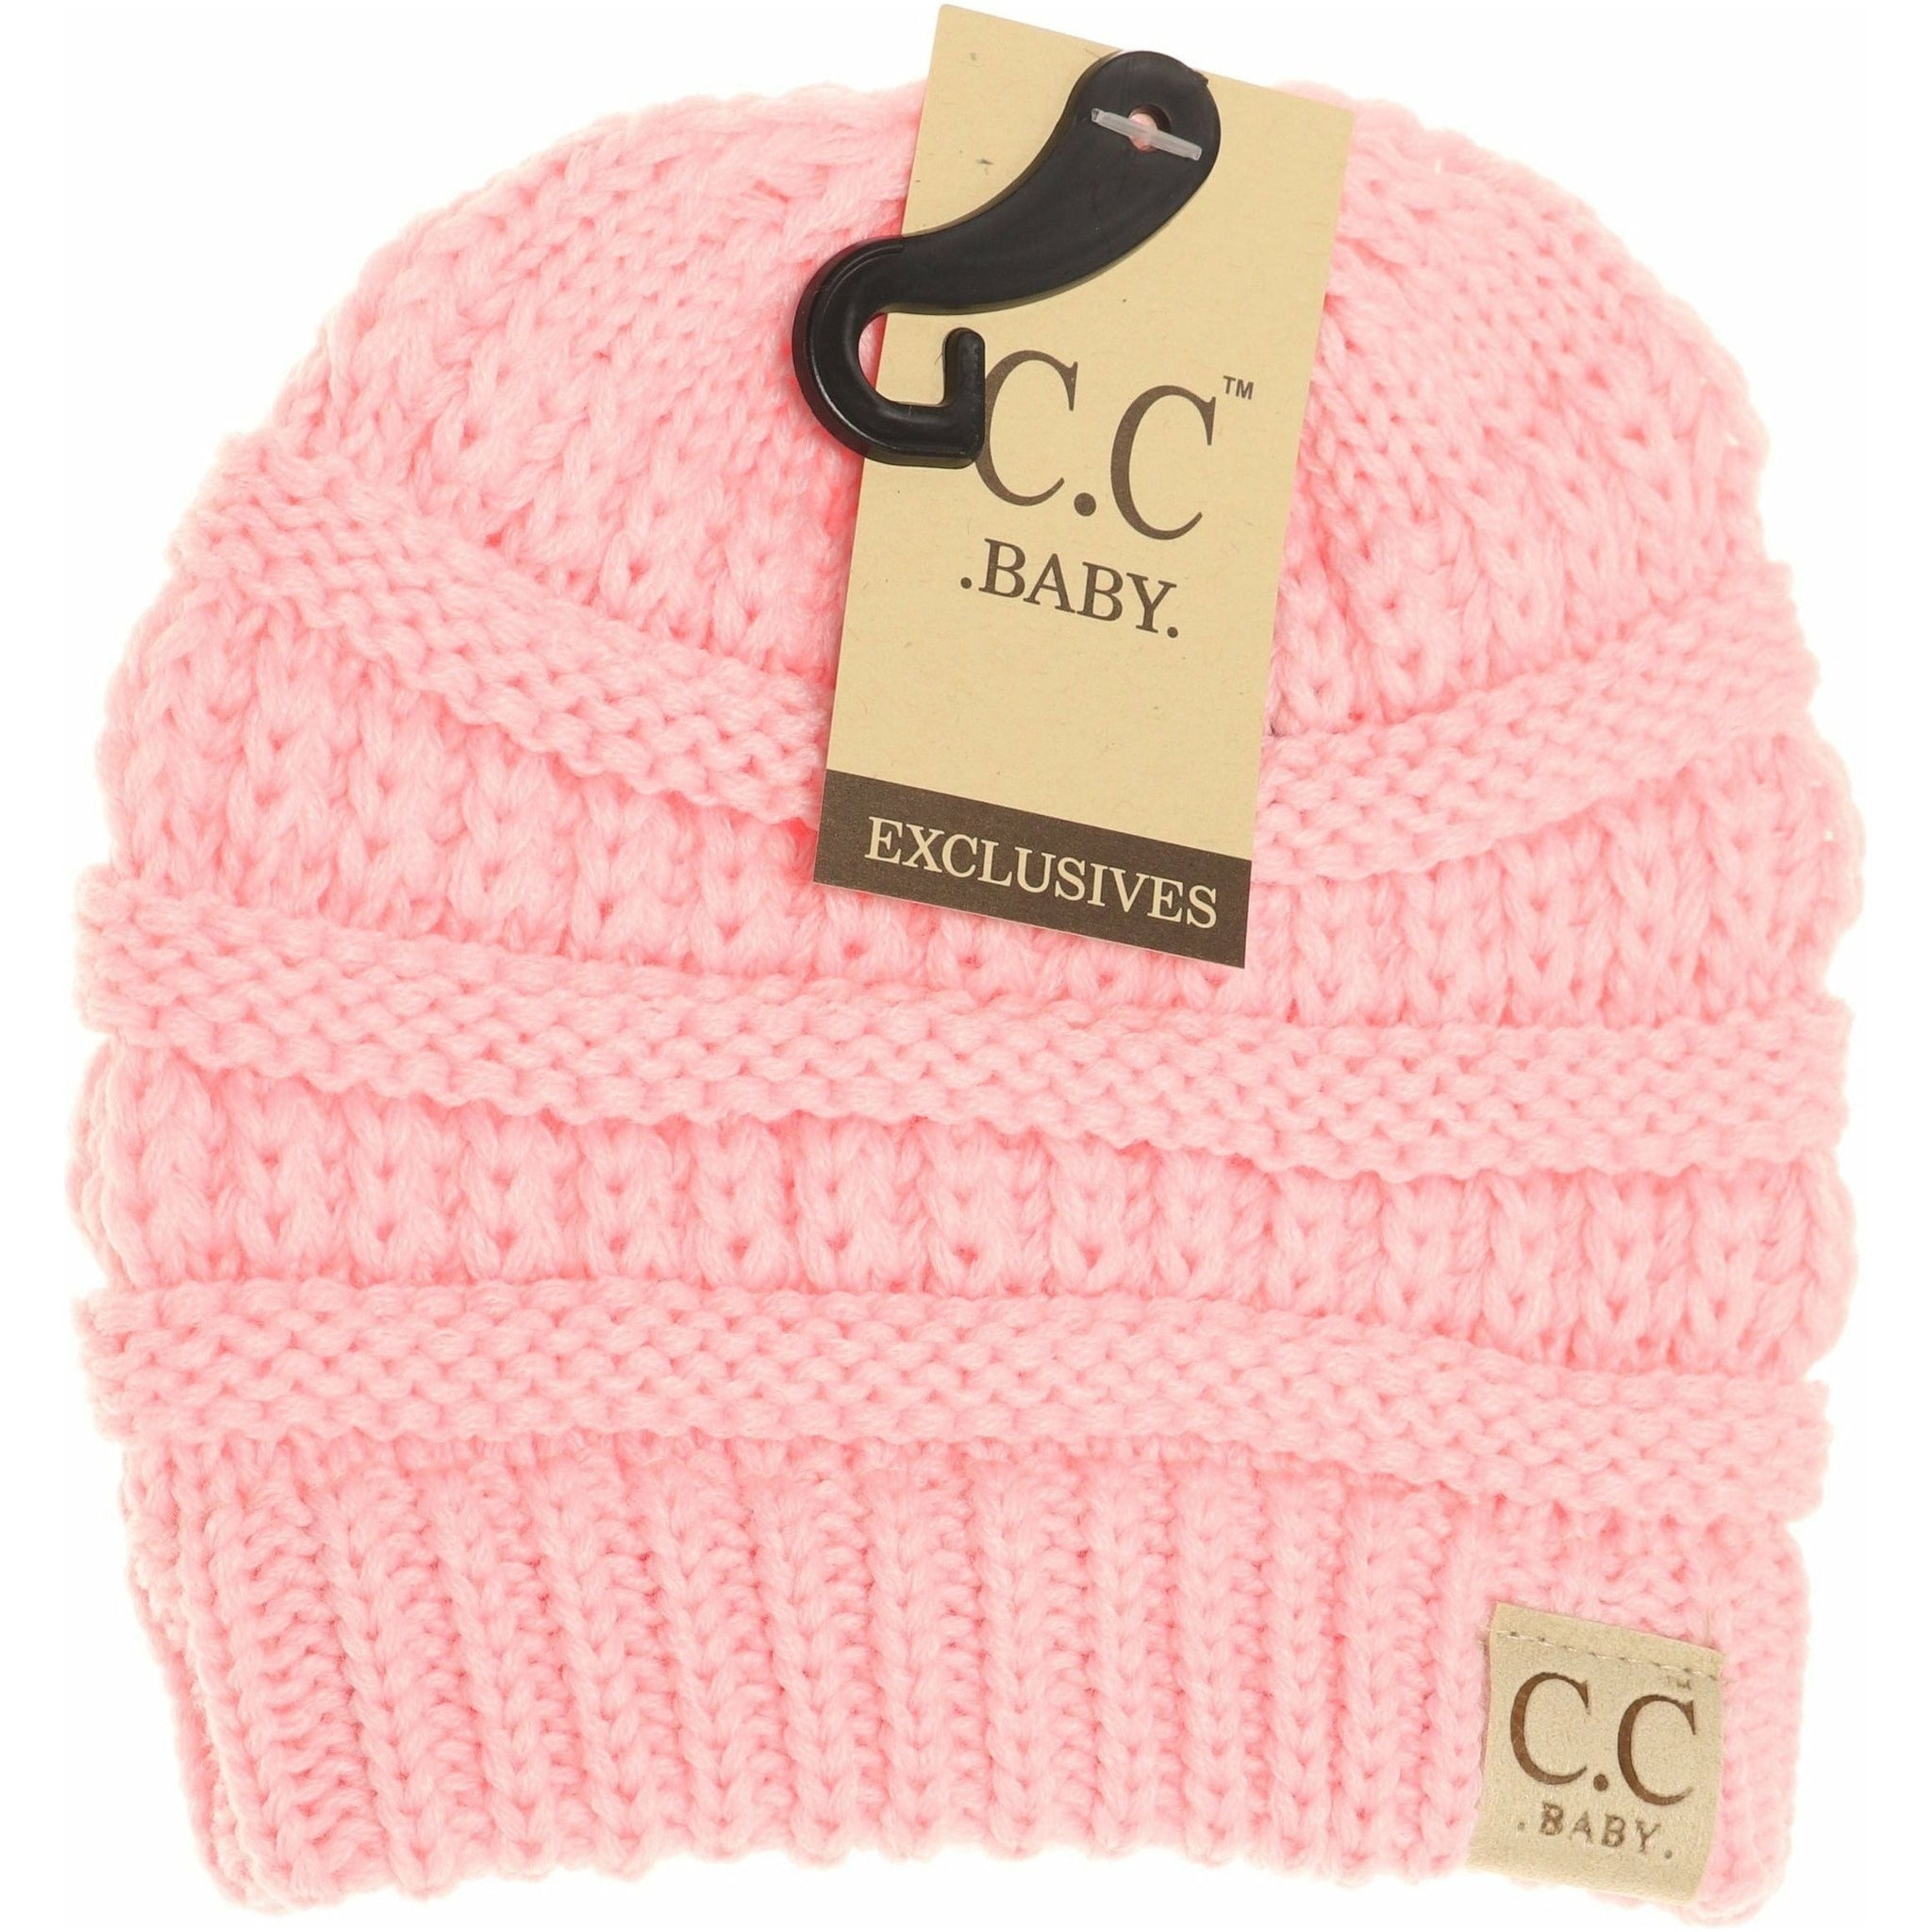 baby cc hats